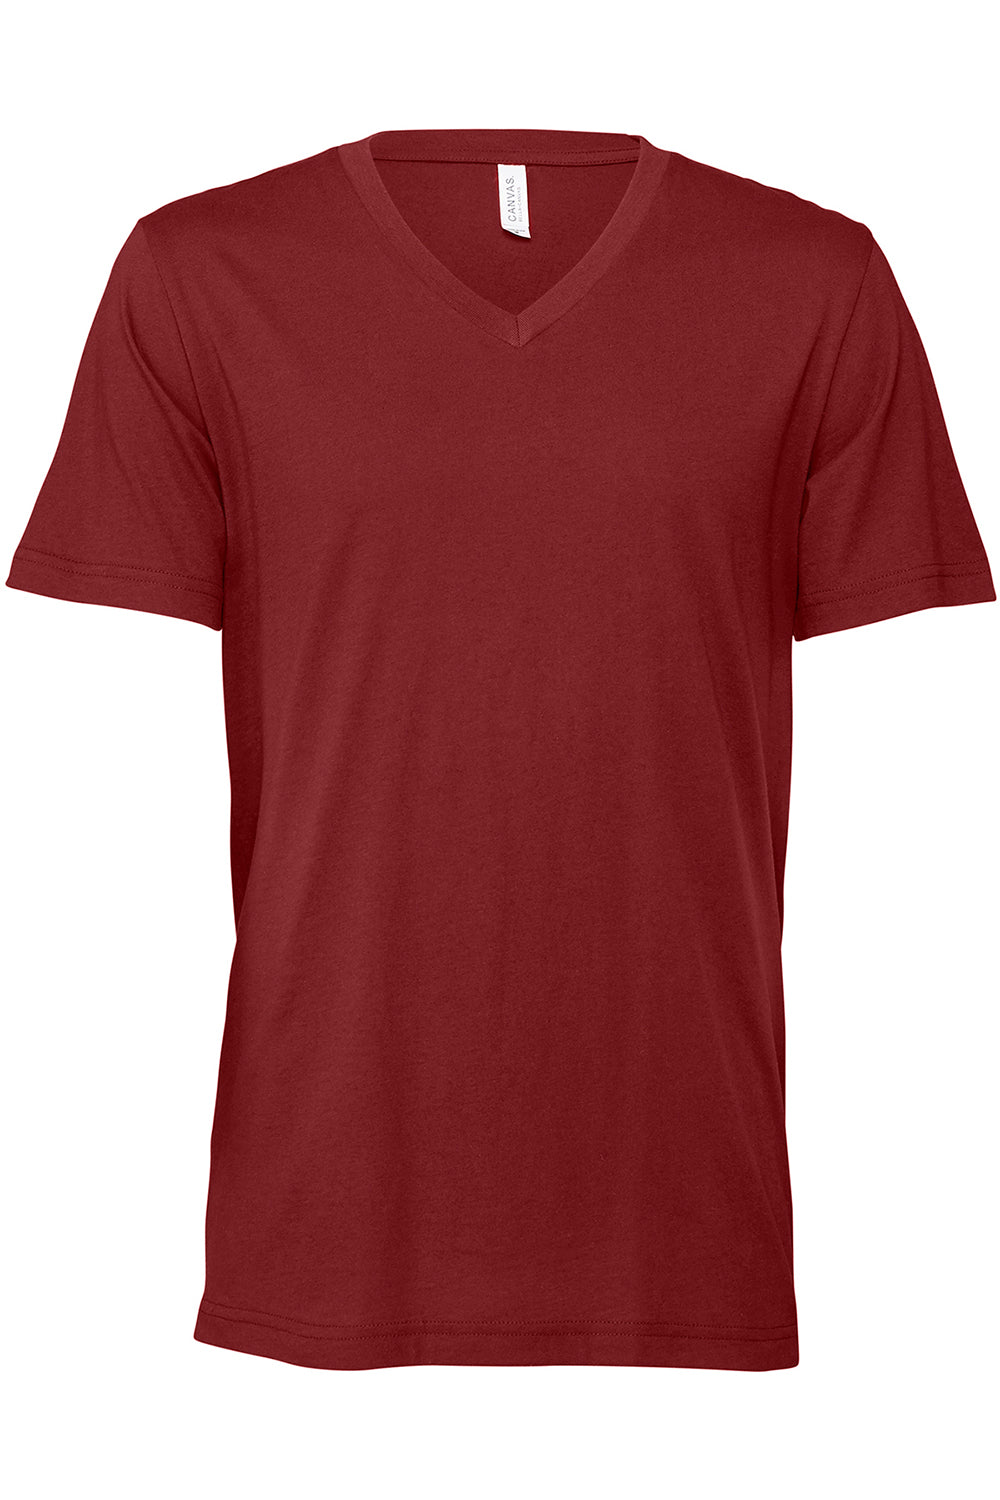 Bella + Canvas BC3005/3005/3655C Mens Jersey Short Sleeve V-Neck T-Shirt Cardinal Red Flat Front